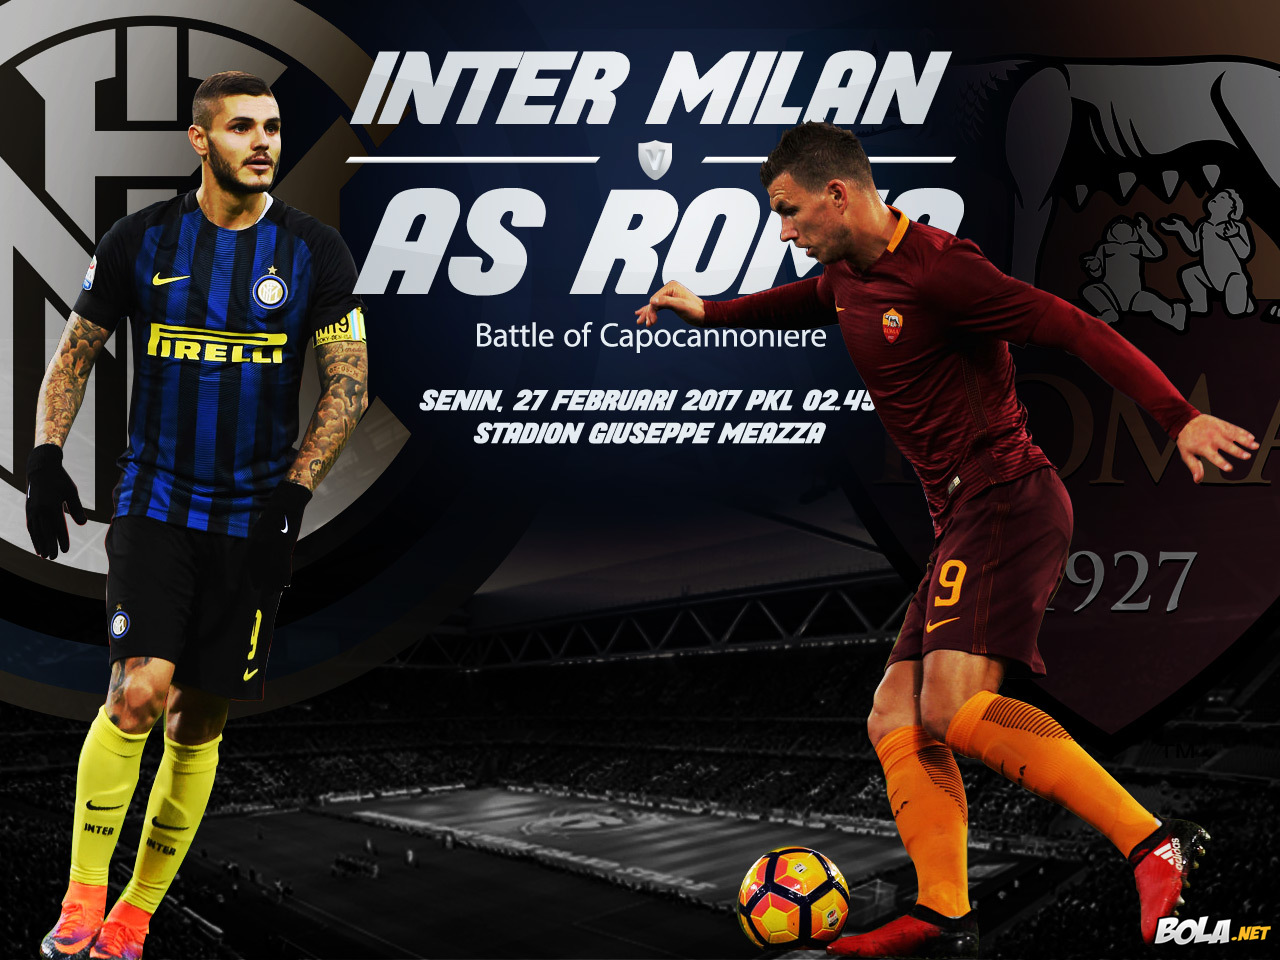 Deskripsi : Wallpaper Inter Milan Vs As Roma, size: 1280x960